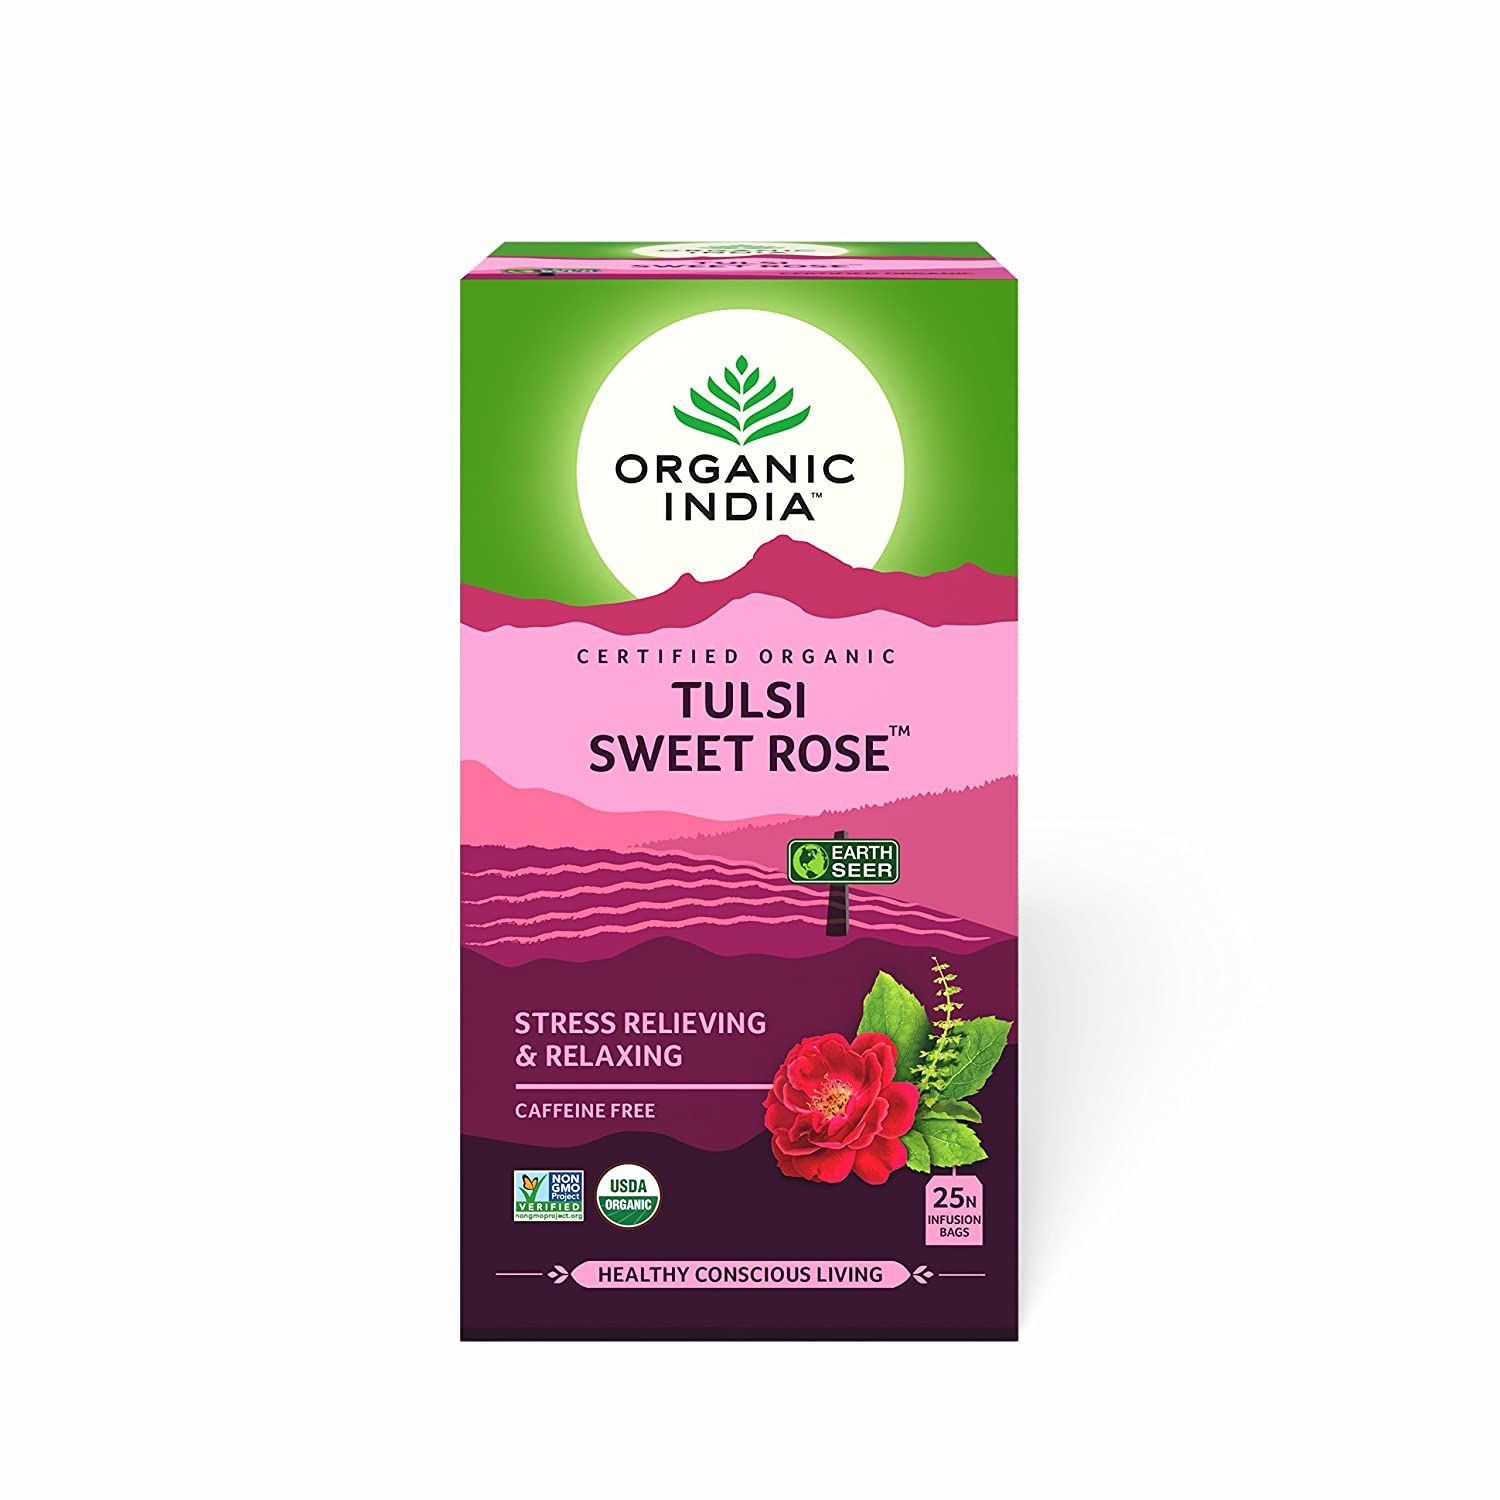 Organic India Tulsi Sweet Rose Tea Image